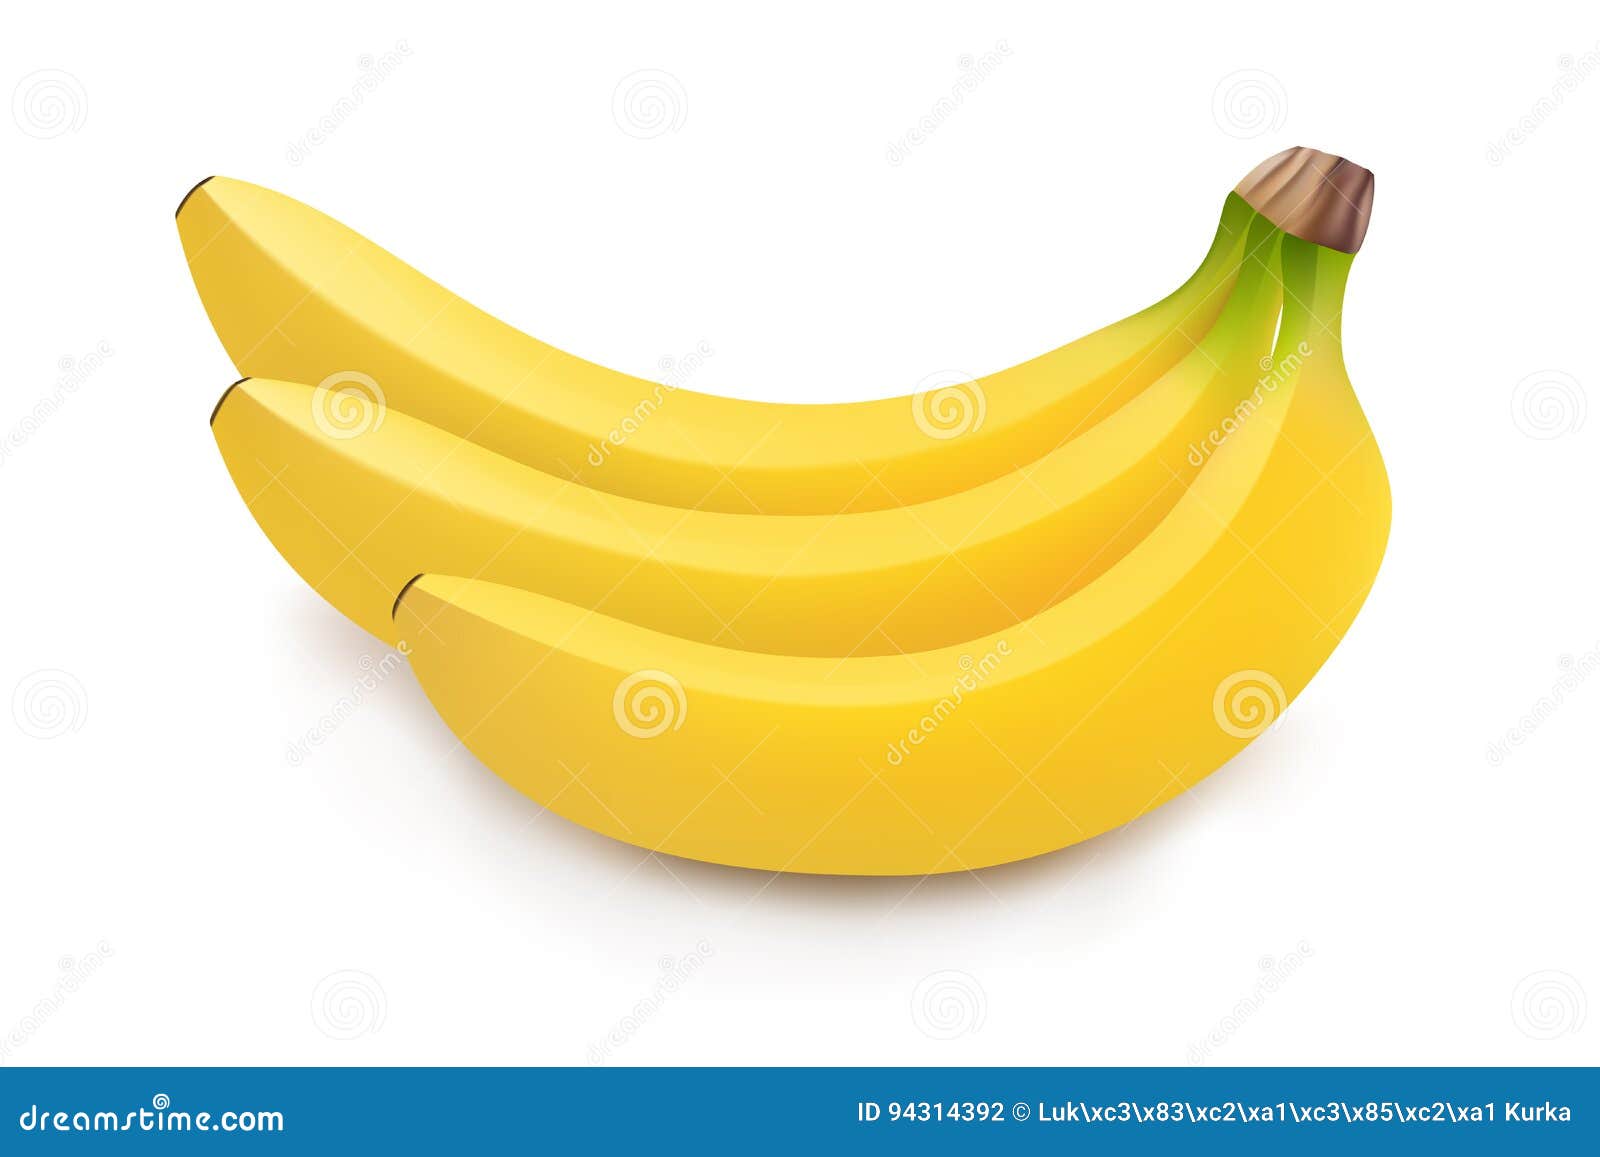 realistic  of bunch of bananas